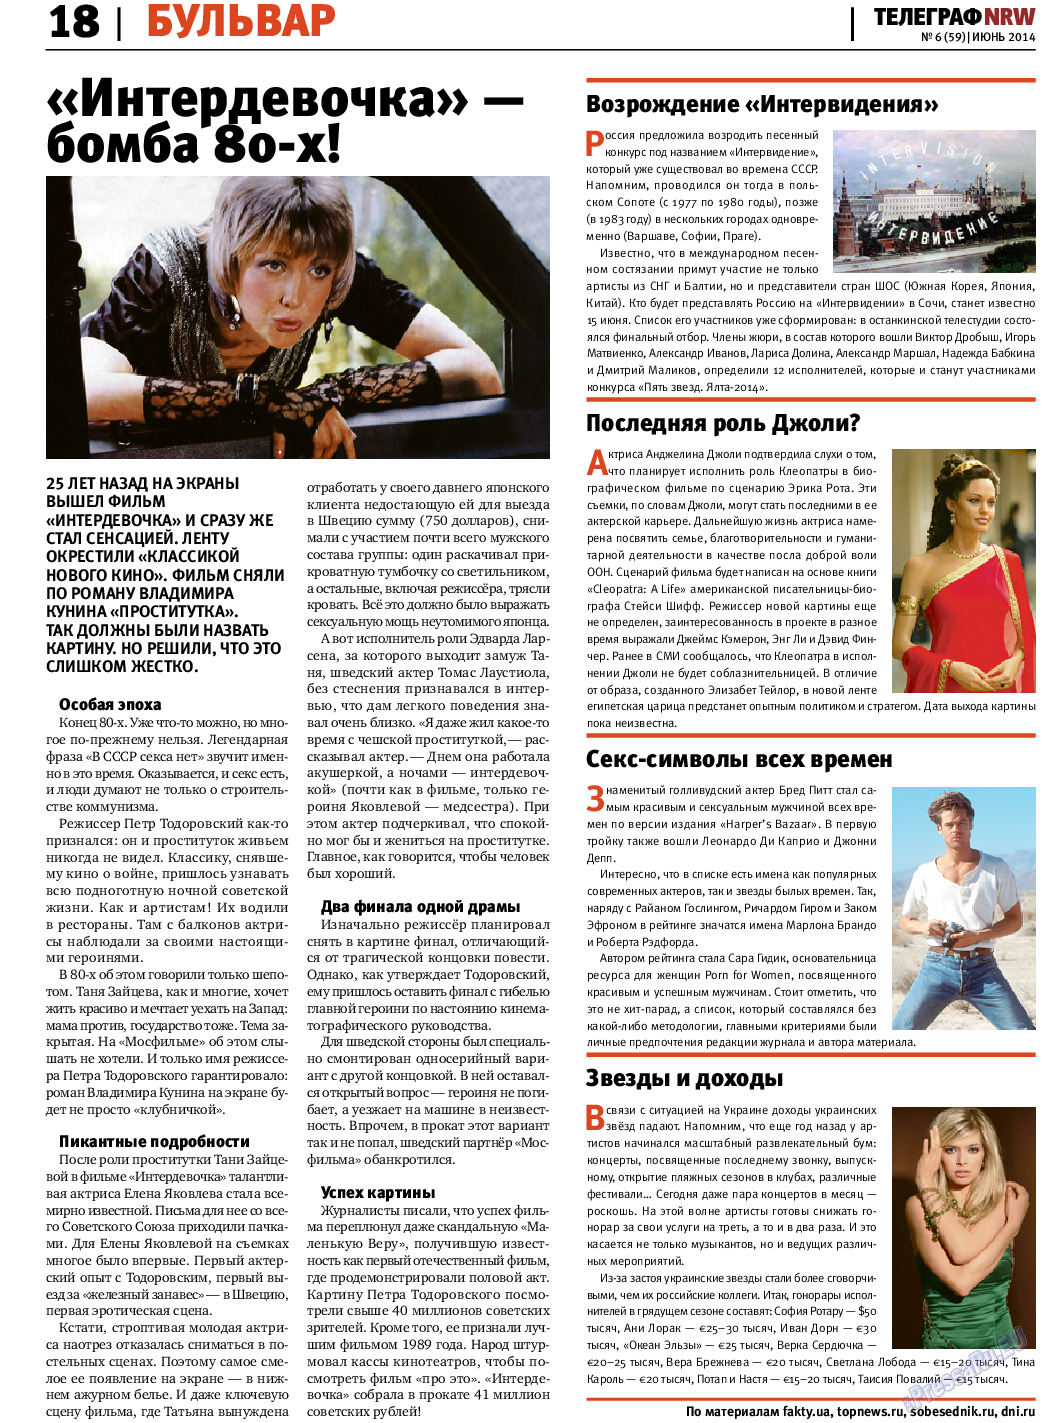 Телеграф NRW, газета. 2014 №6 стр.18